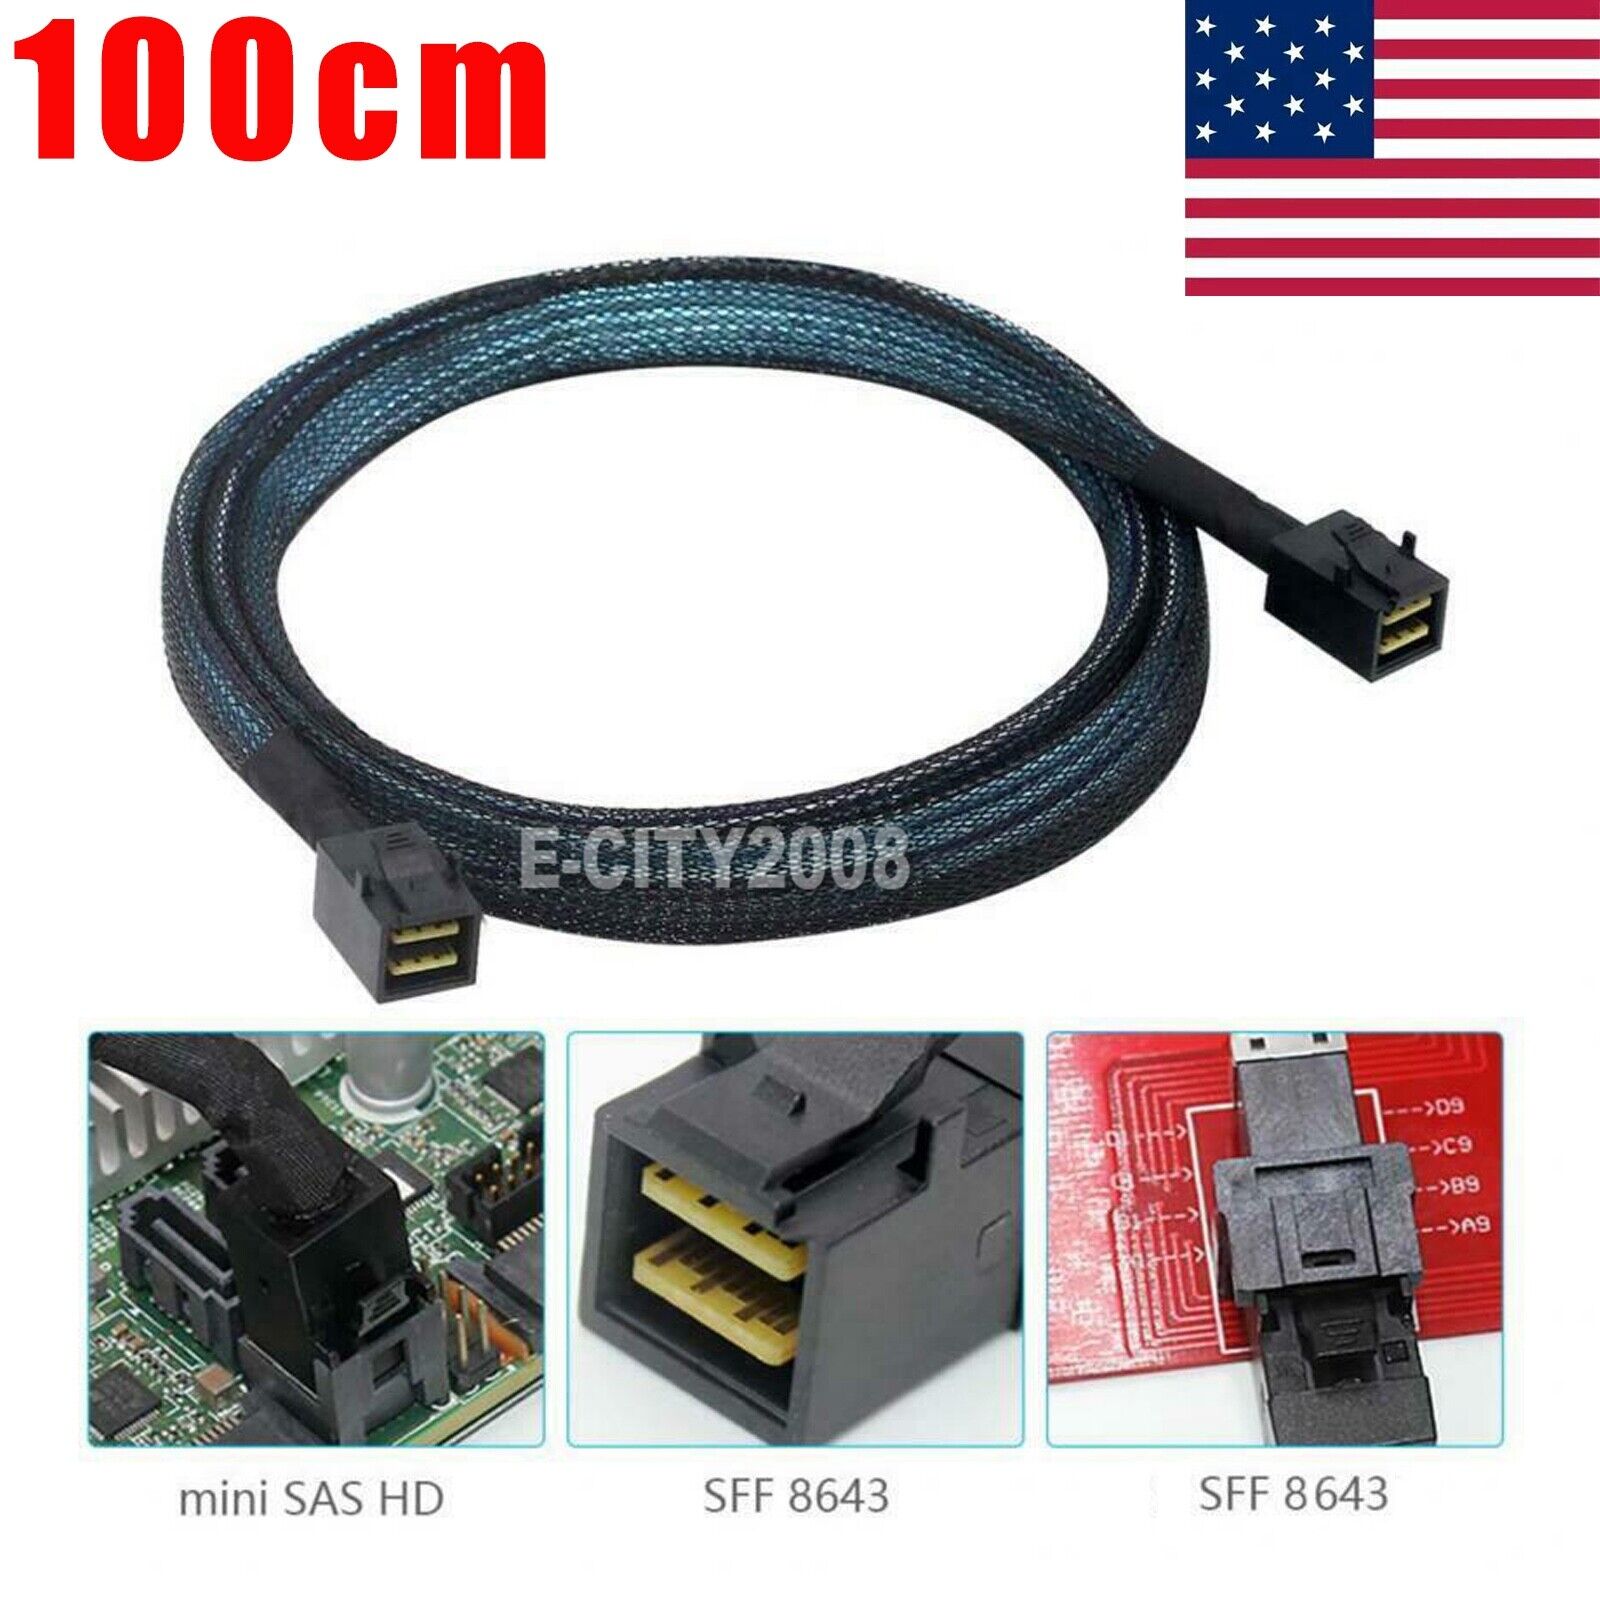 1m Internal Mini SAS SFF-8643 to SFF-8643 Cable For RAID PCI Express Controller